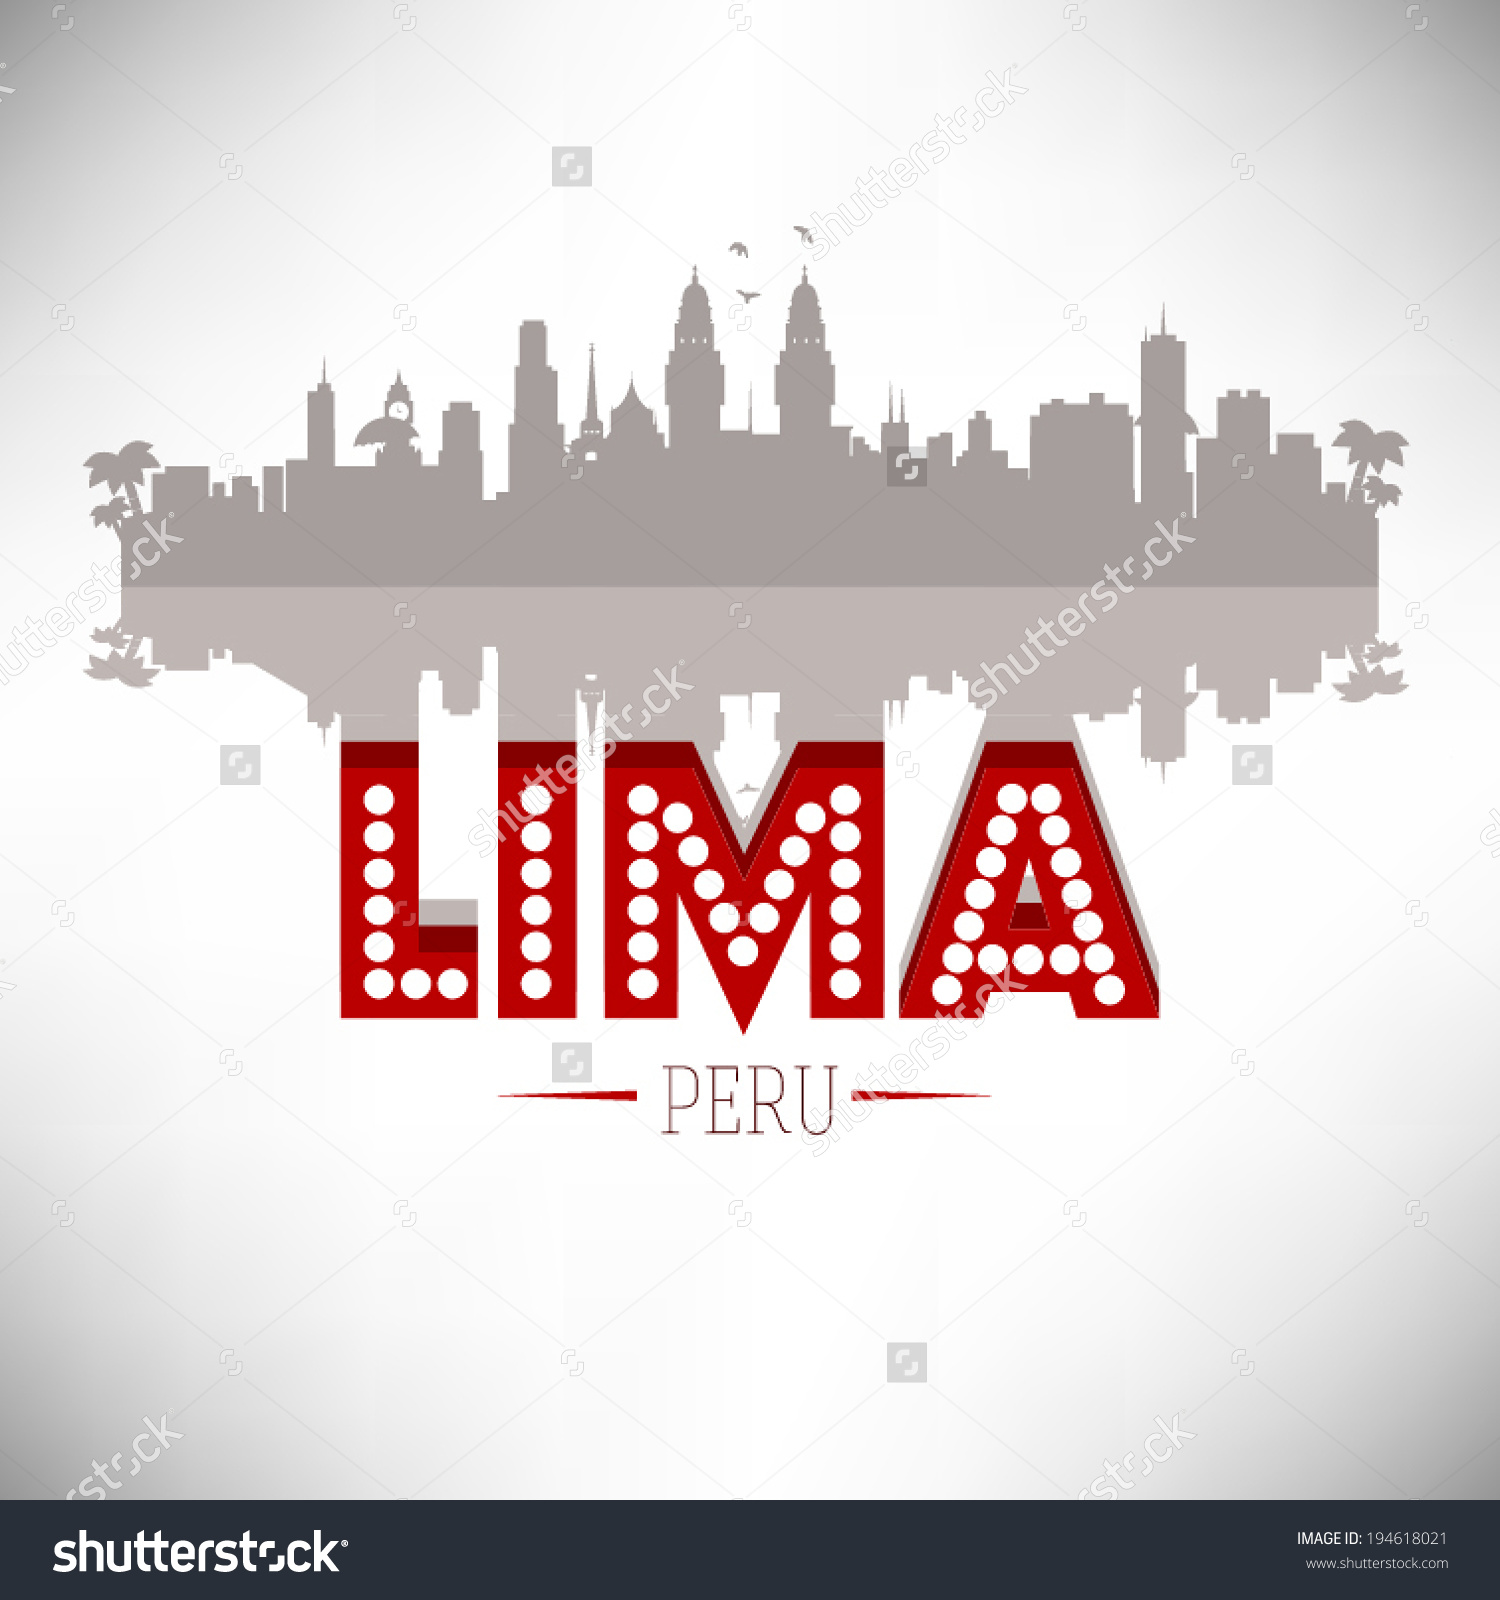 Lima Peru Skyline Silhouette Design Vector Stock Vector 194618021.